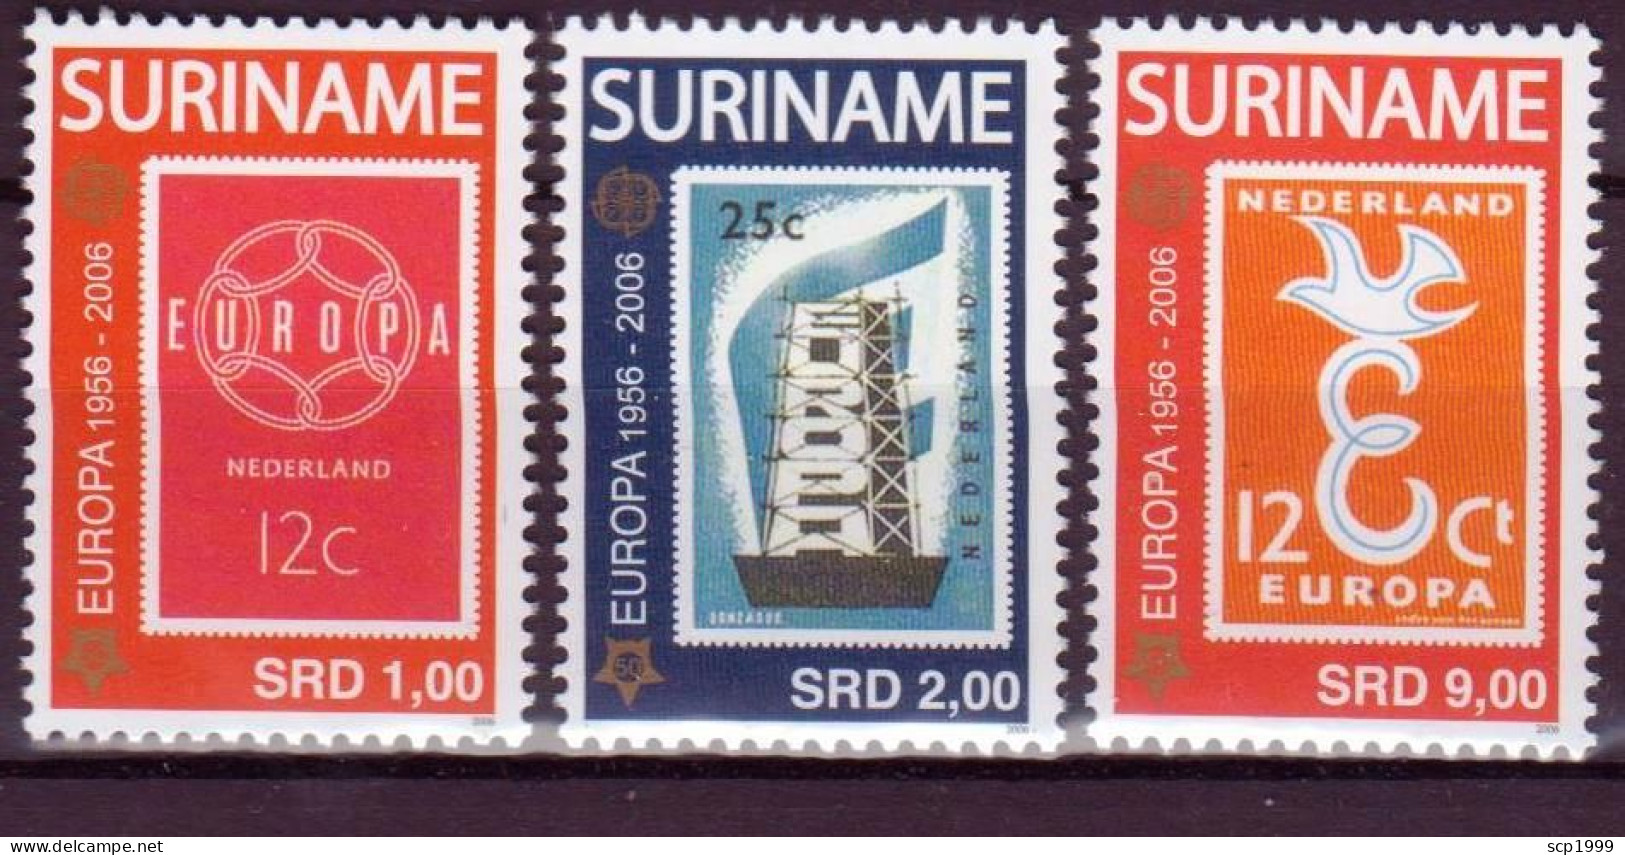 Suriname 2006 - Europa 50 Years Stamps Set MNH - Suriname